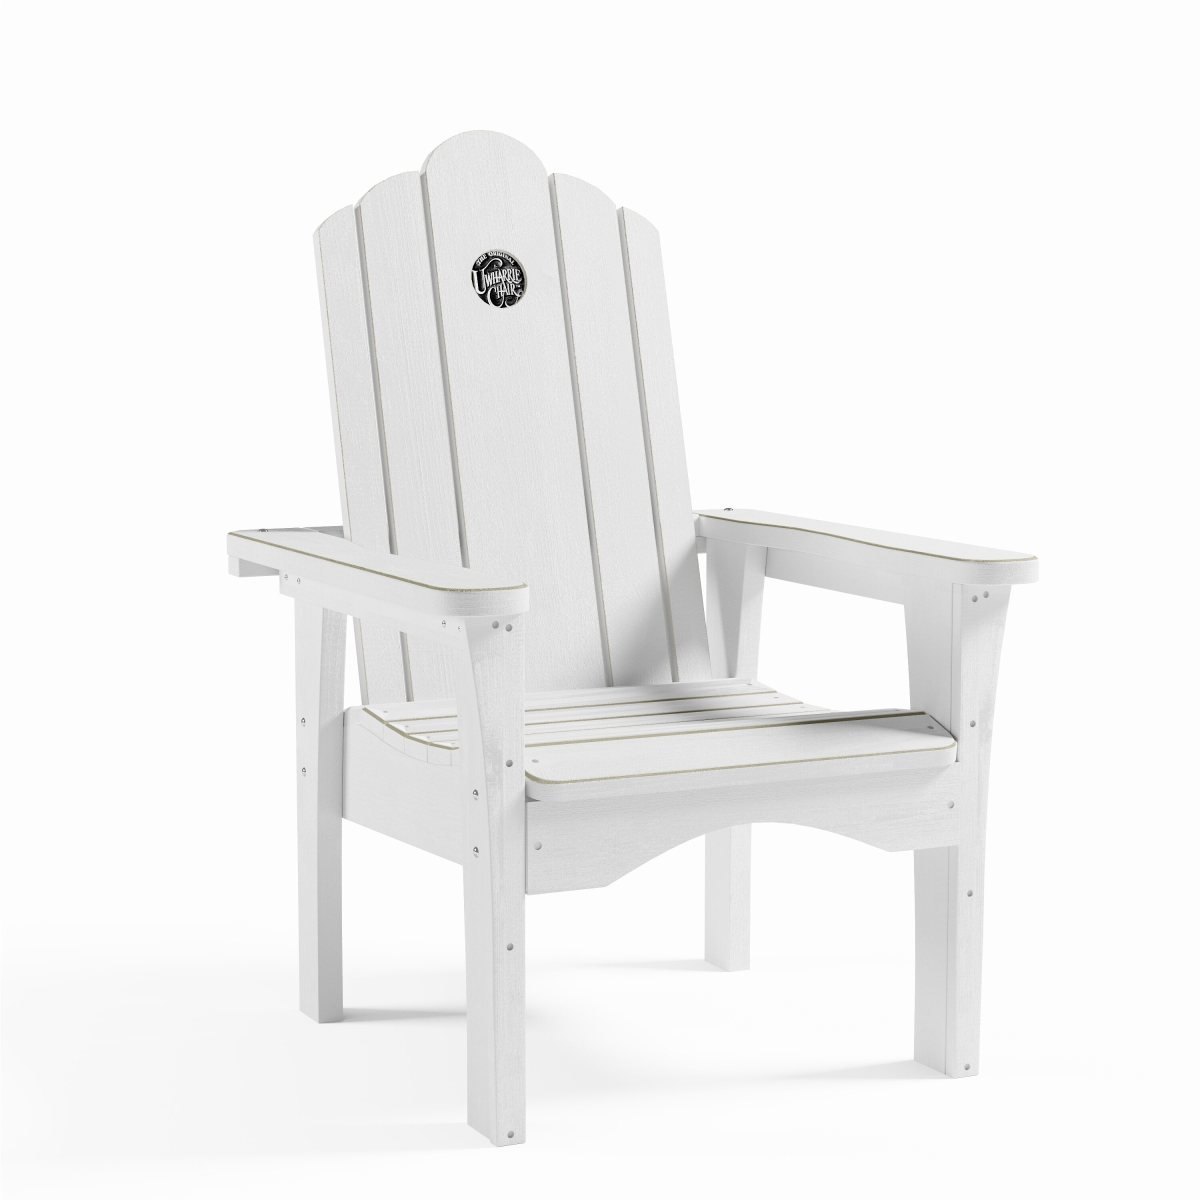 S114-019 Original Wood Lounge Chair, Hunter Pine - 30.5 X 33.5 X 43.5 In.